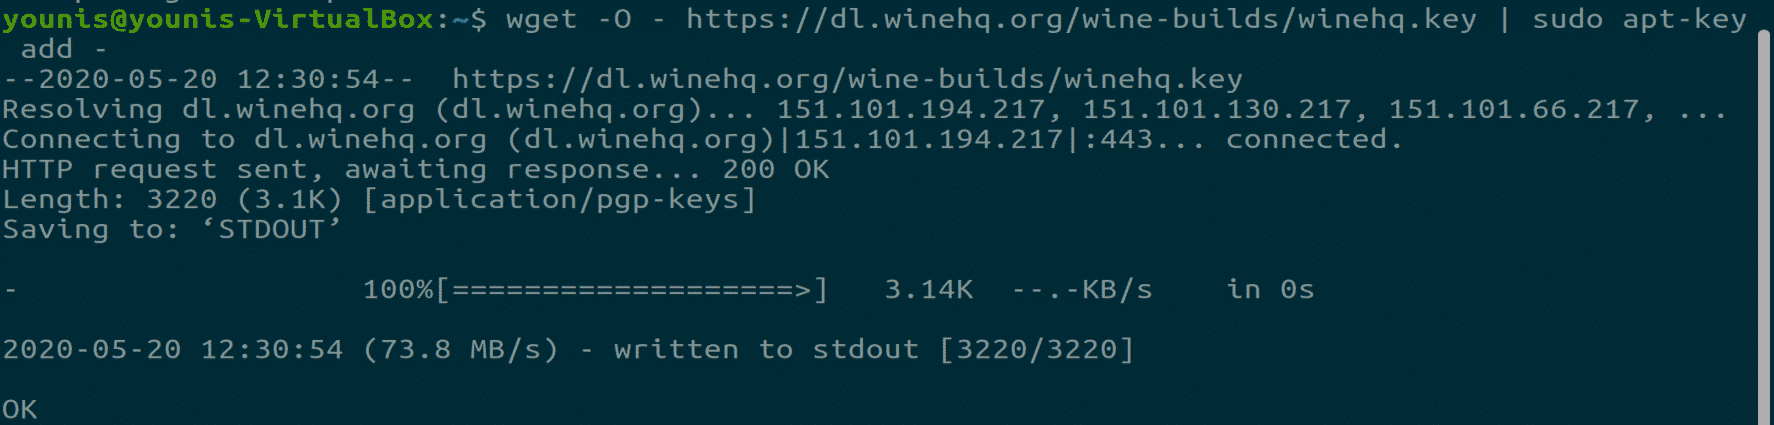 Репозитории Wine. Запуск программы Wine Linux 8.0 PNG. Wine Linux 8.0 PNG.